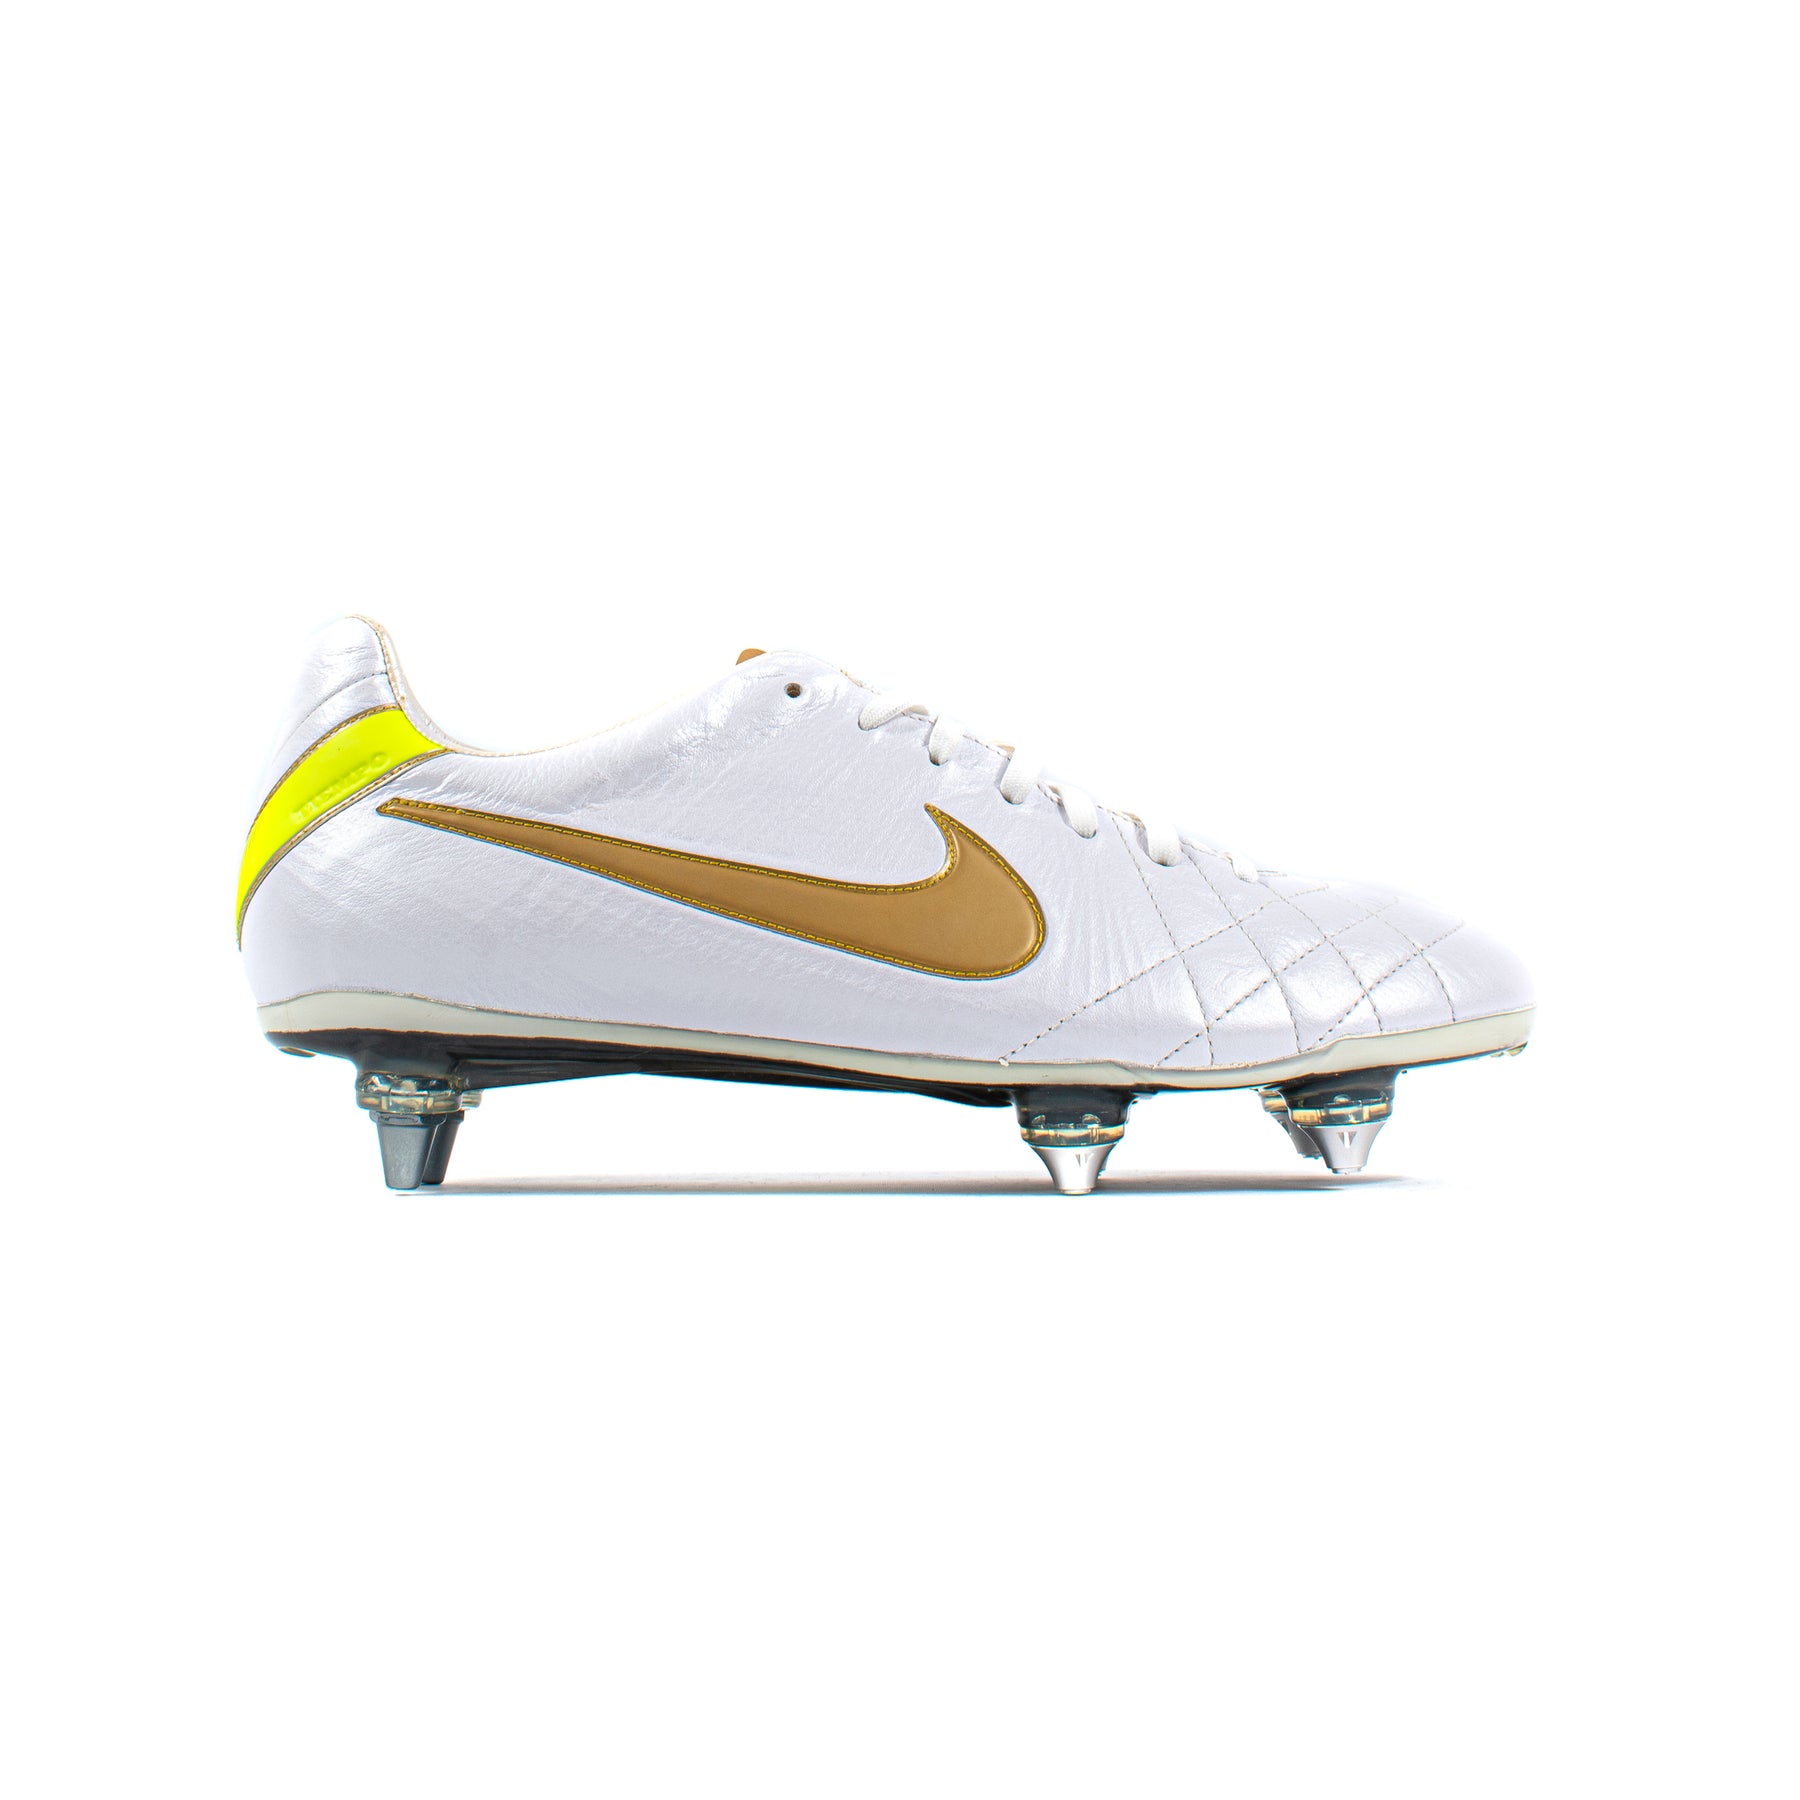 Nike Legend IV Elite White Gold SG – Soccer Cleats